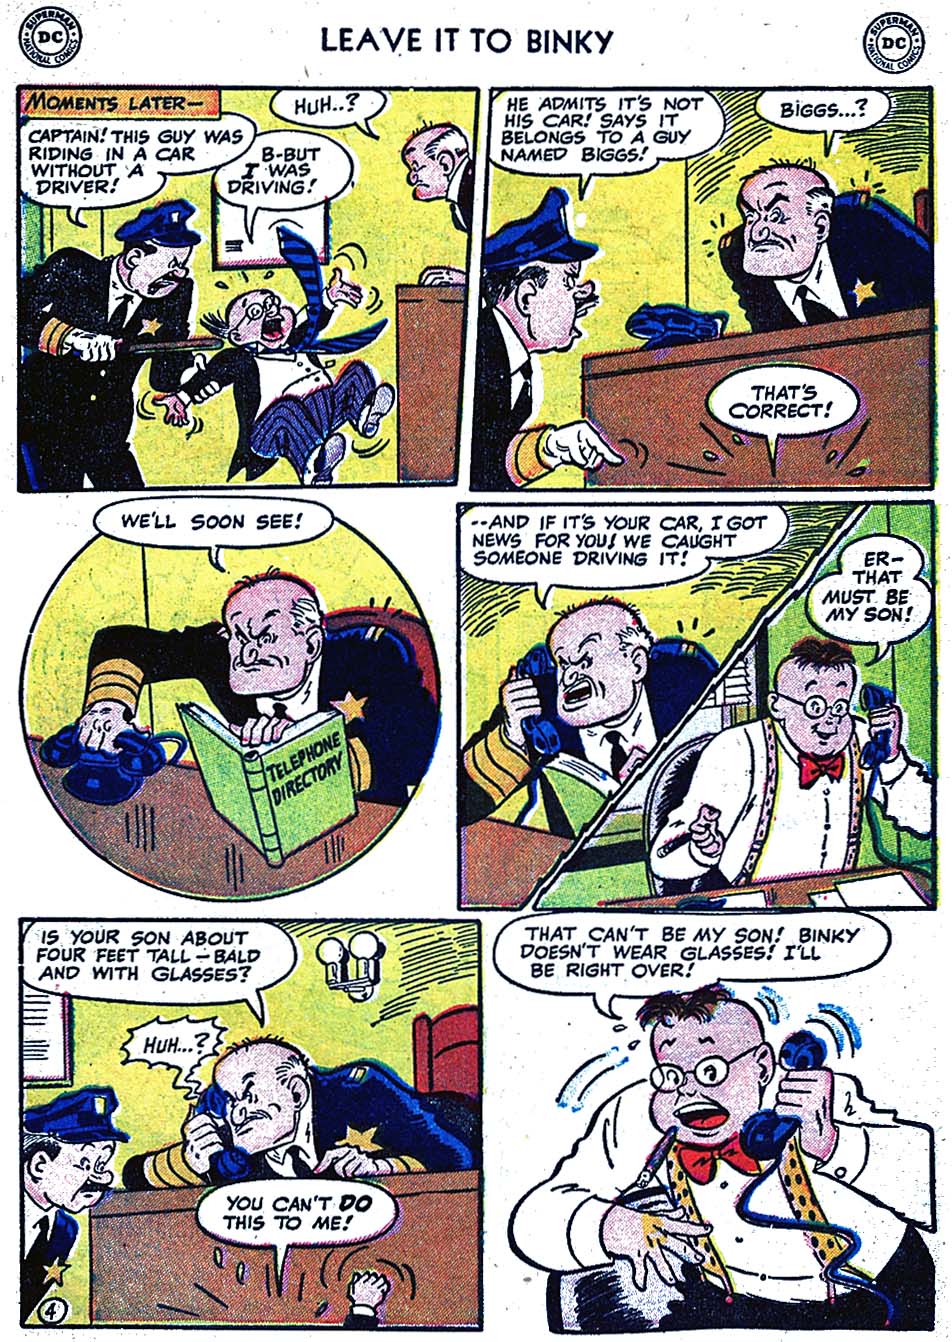 Read online Leave it to Binky comic -  Issue #34 - 37